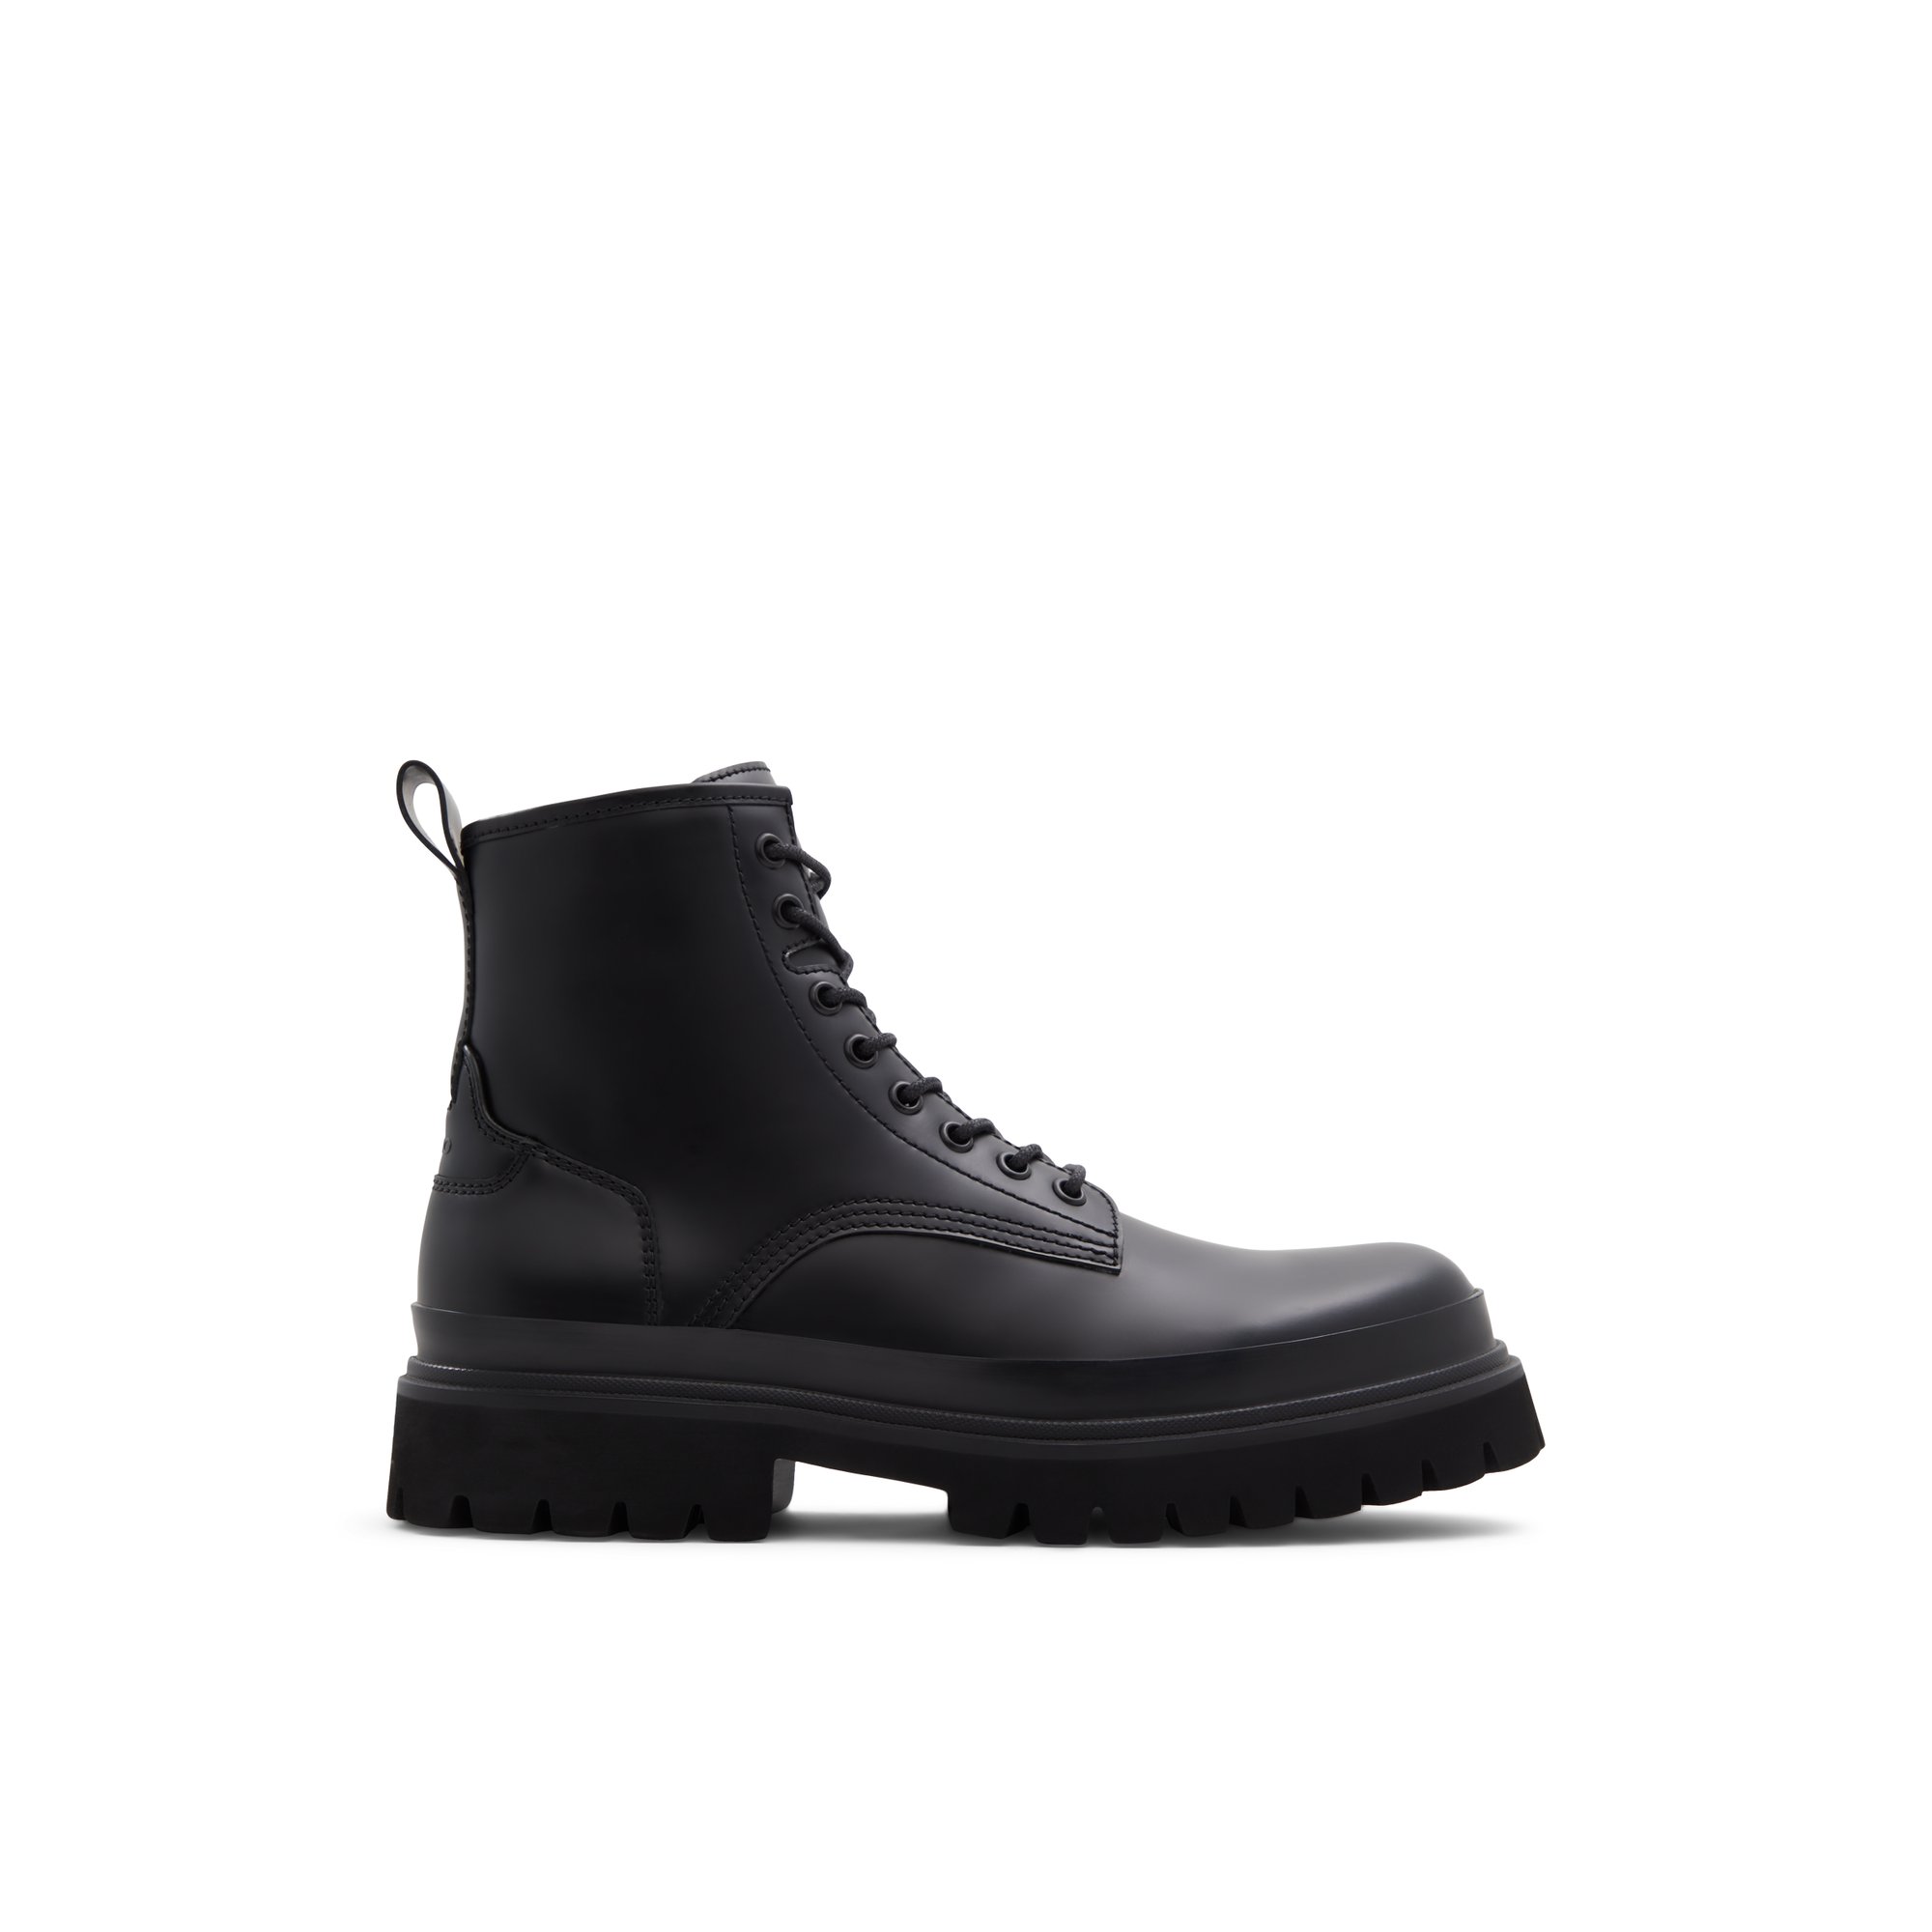 ALDO Torino - Men's Lace-up Boot - Black